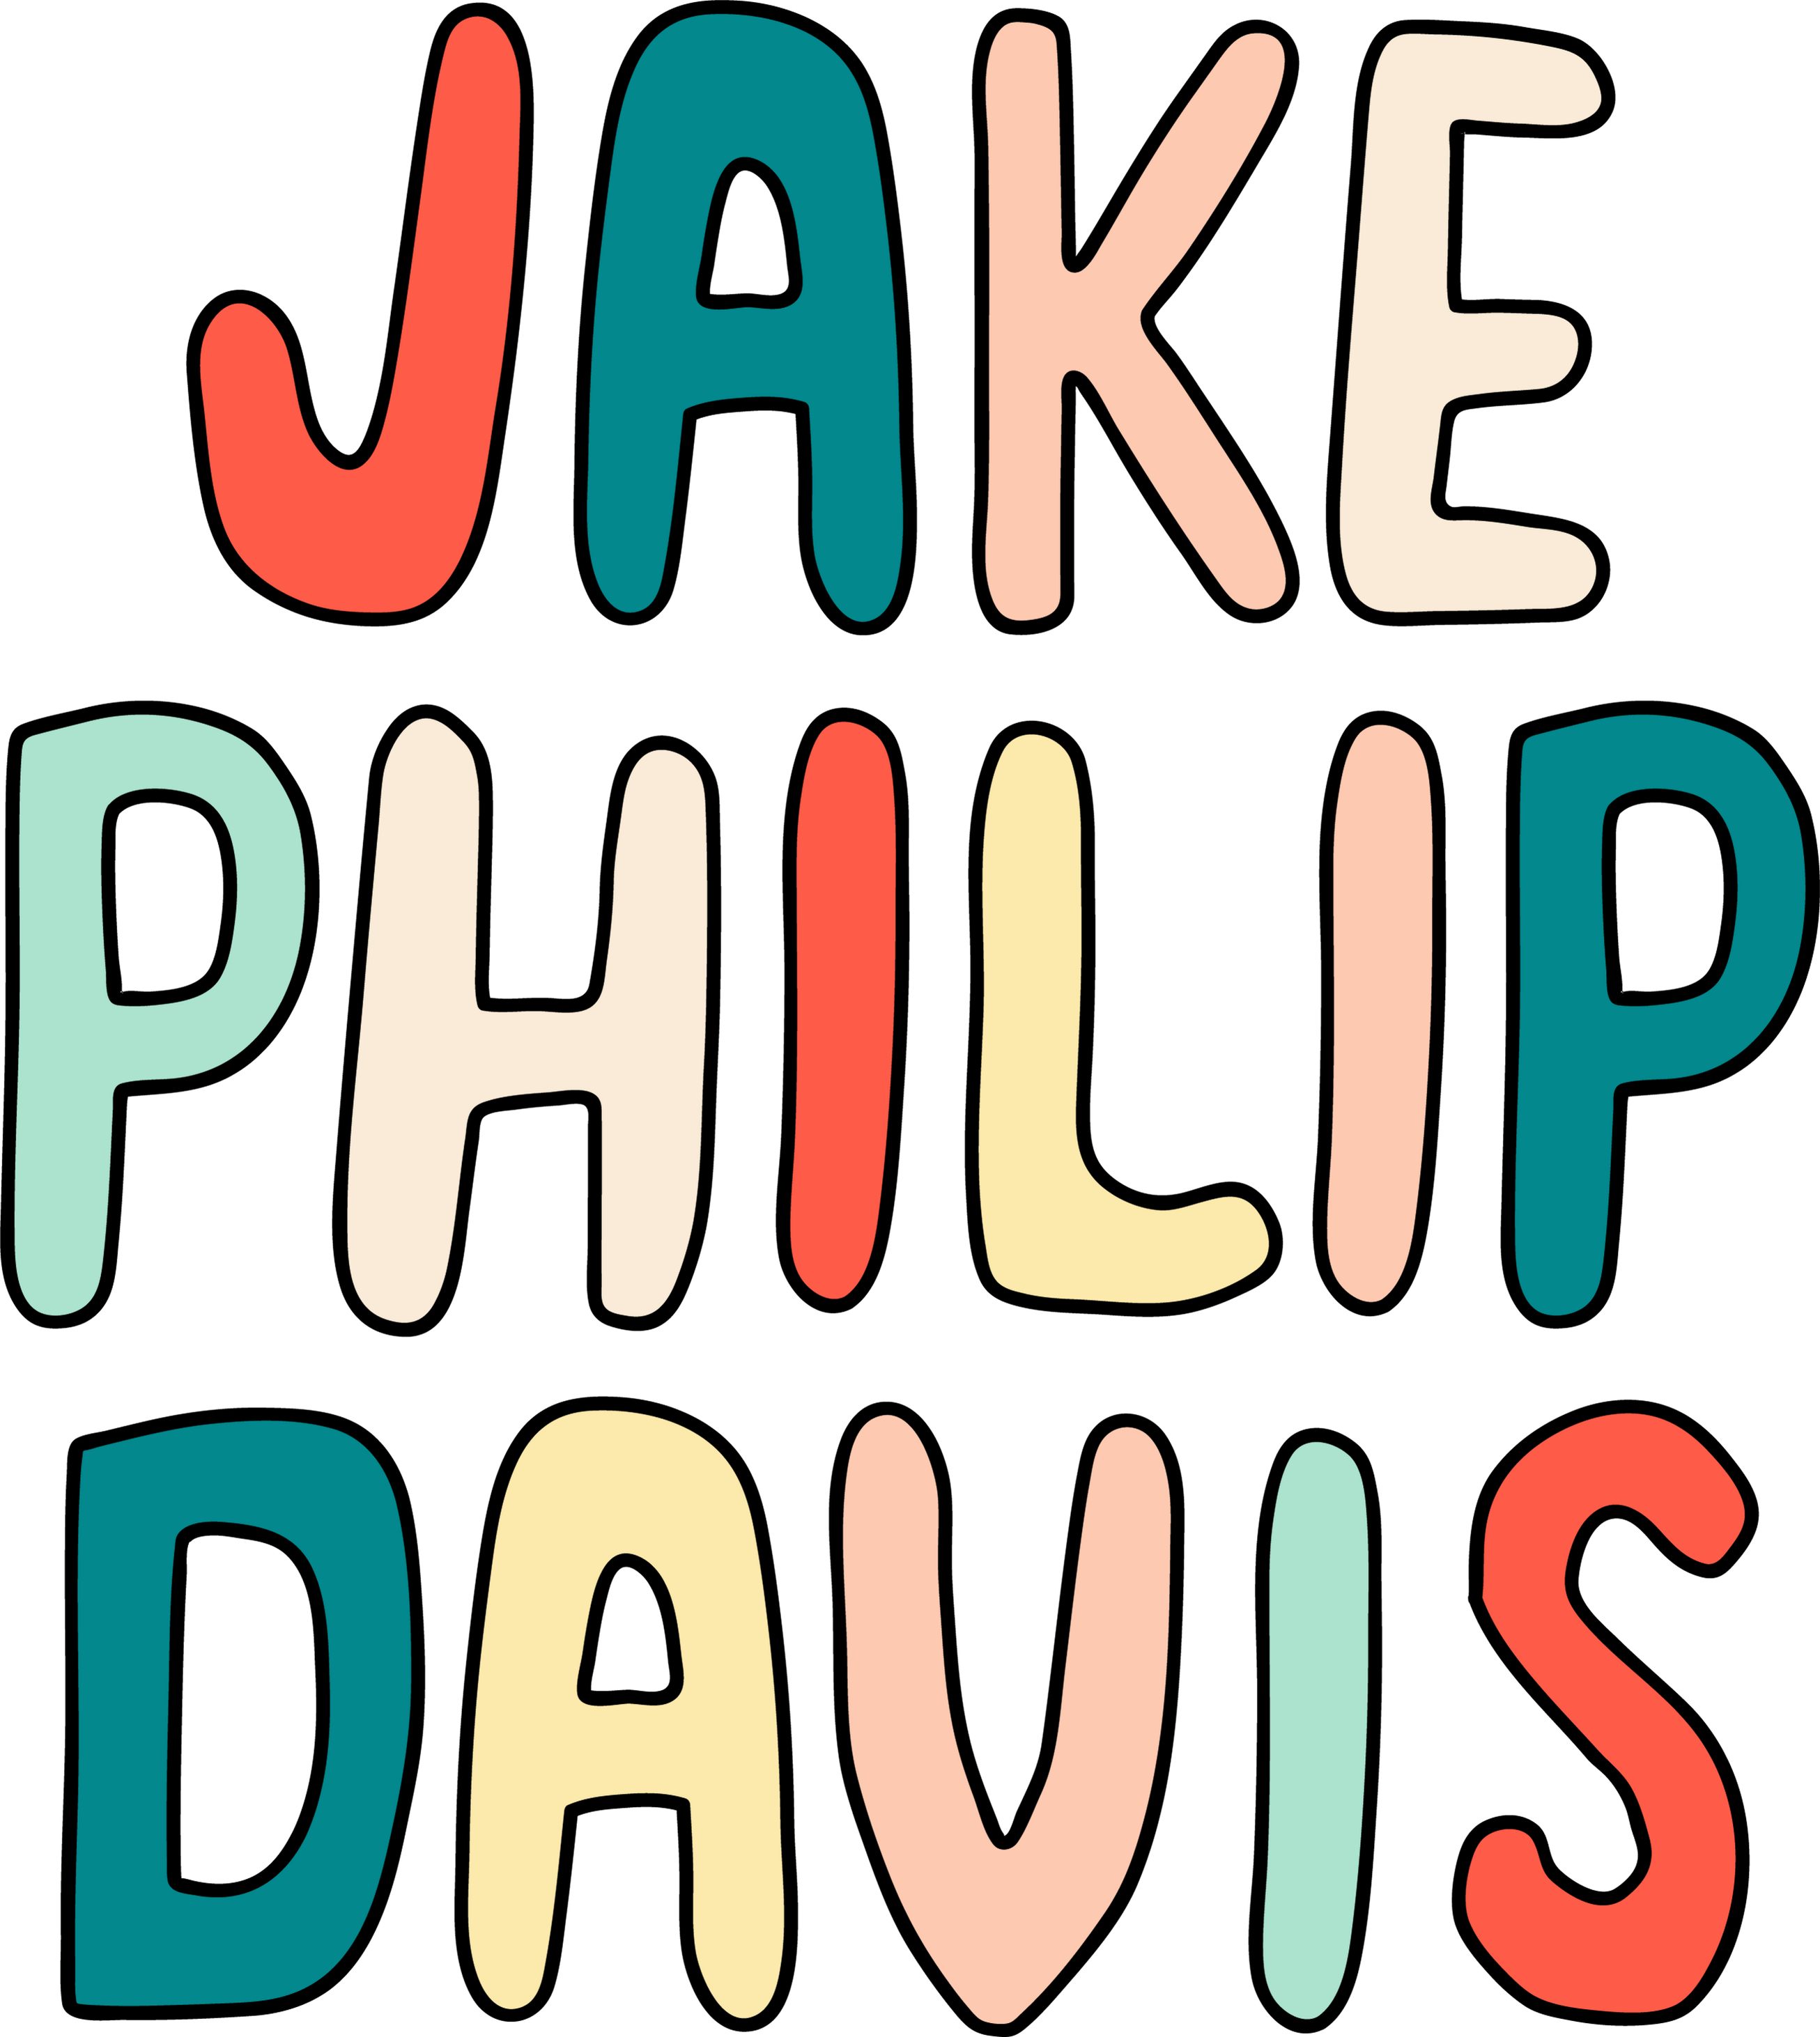 Jake Philip Davis